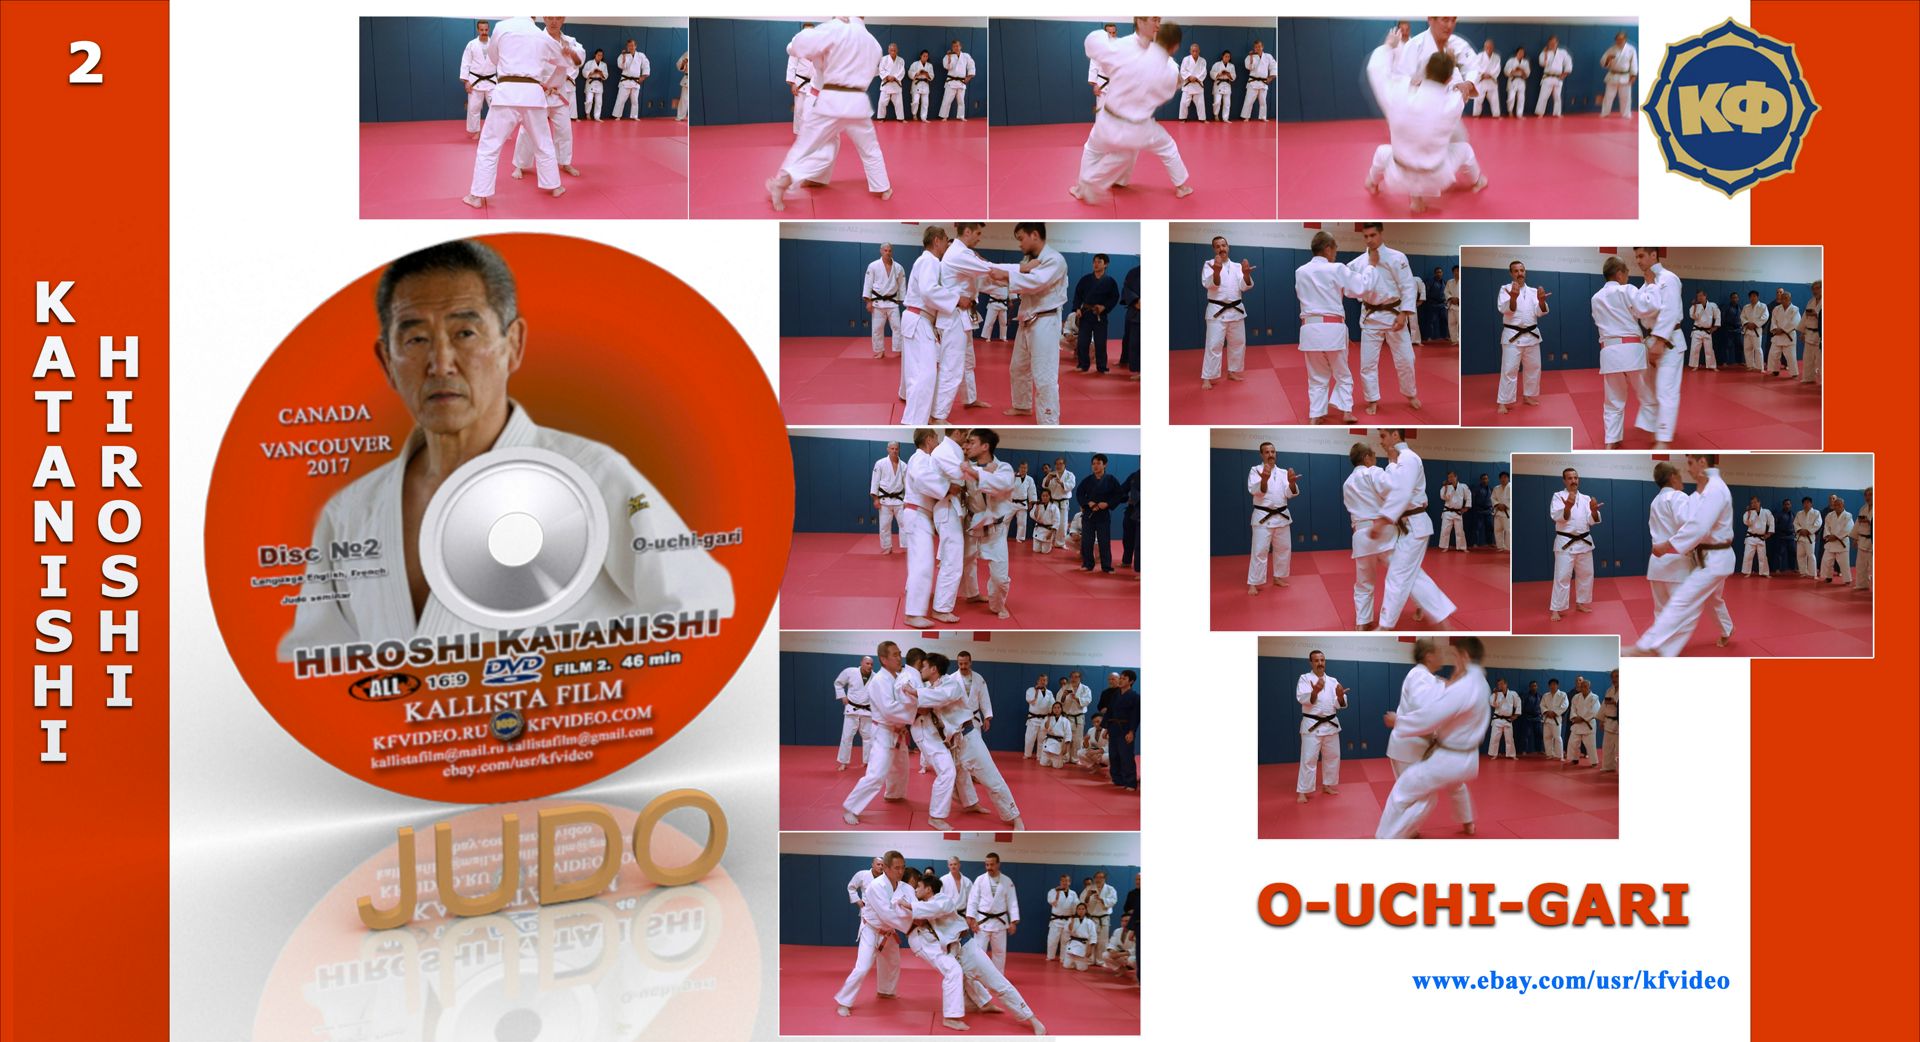 Семинар по технике дзюдо японского тренера Hiroshi Katanishi 8 дан. Филь 2.